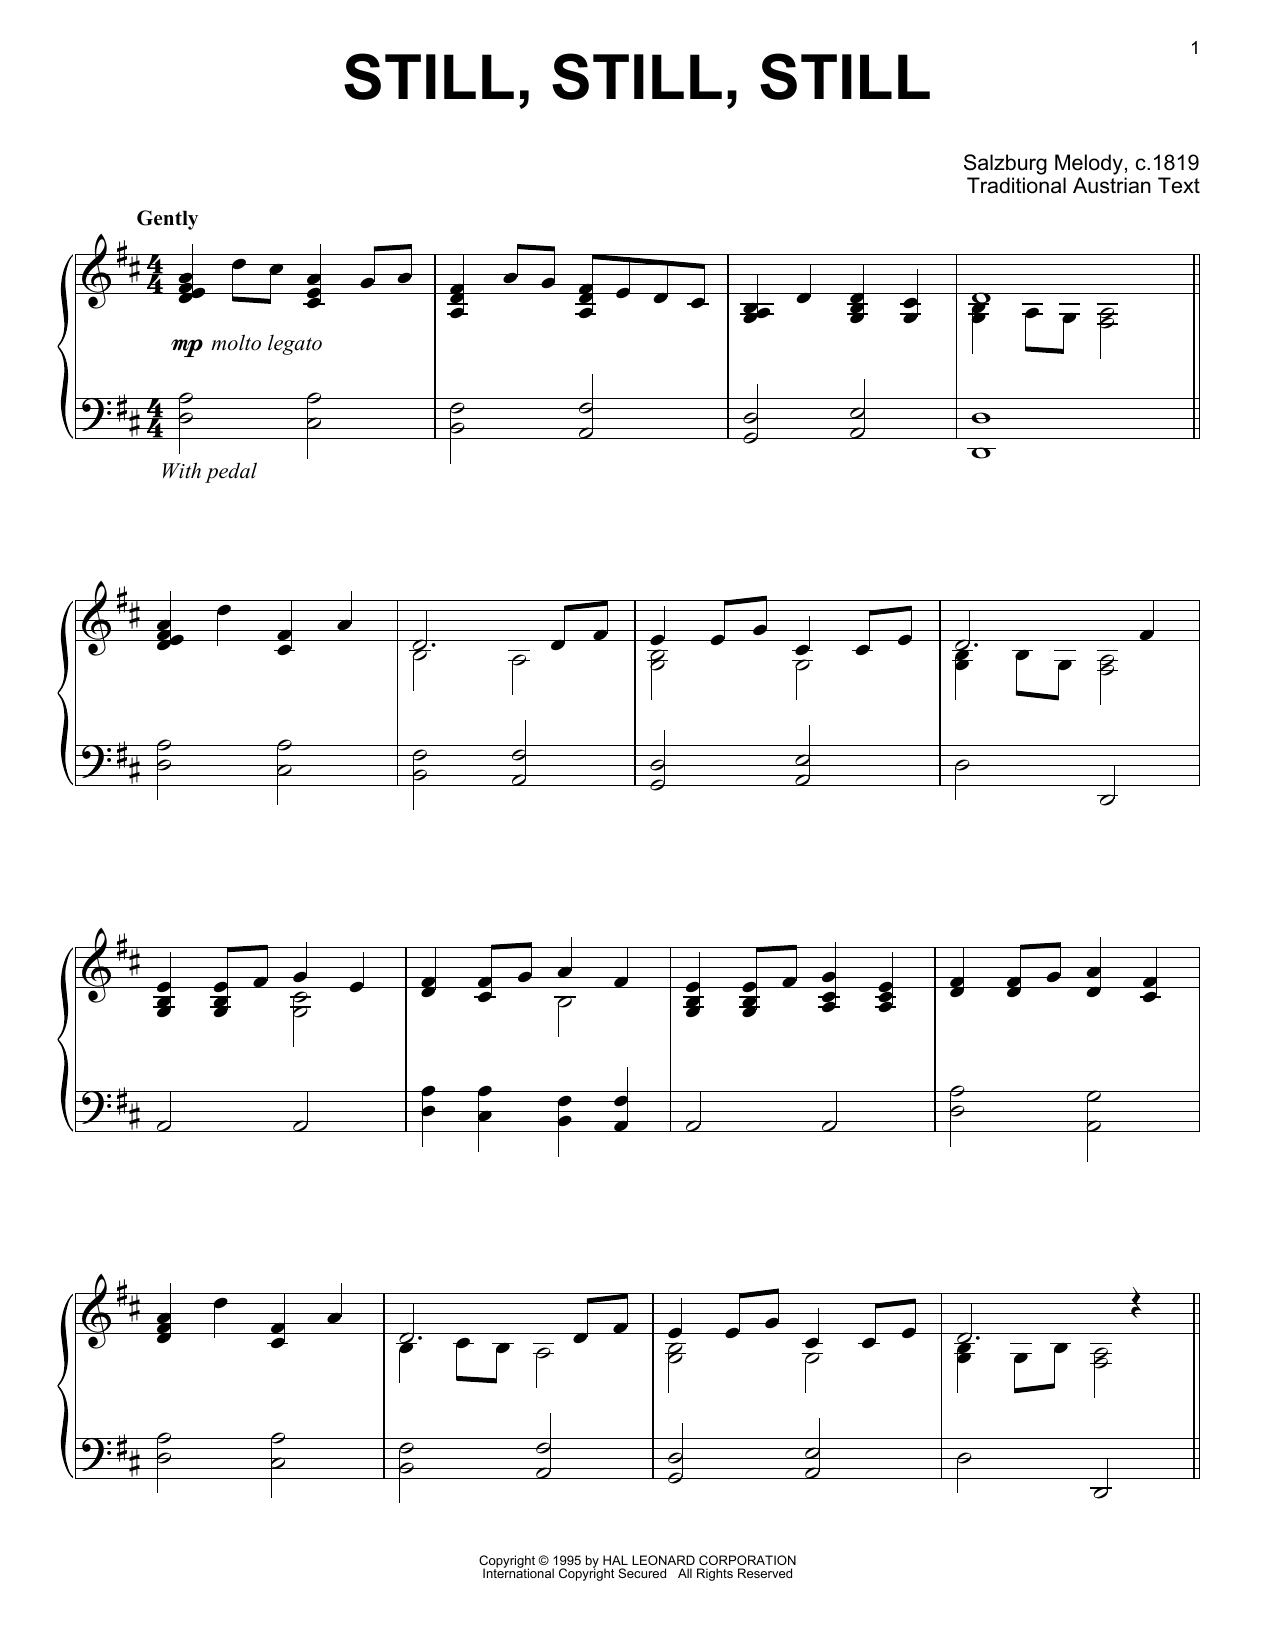 Traditional Still, Still, Still Sheet Music Notes & Chords for Super Easy Piano - Download or Print PDF